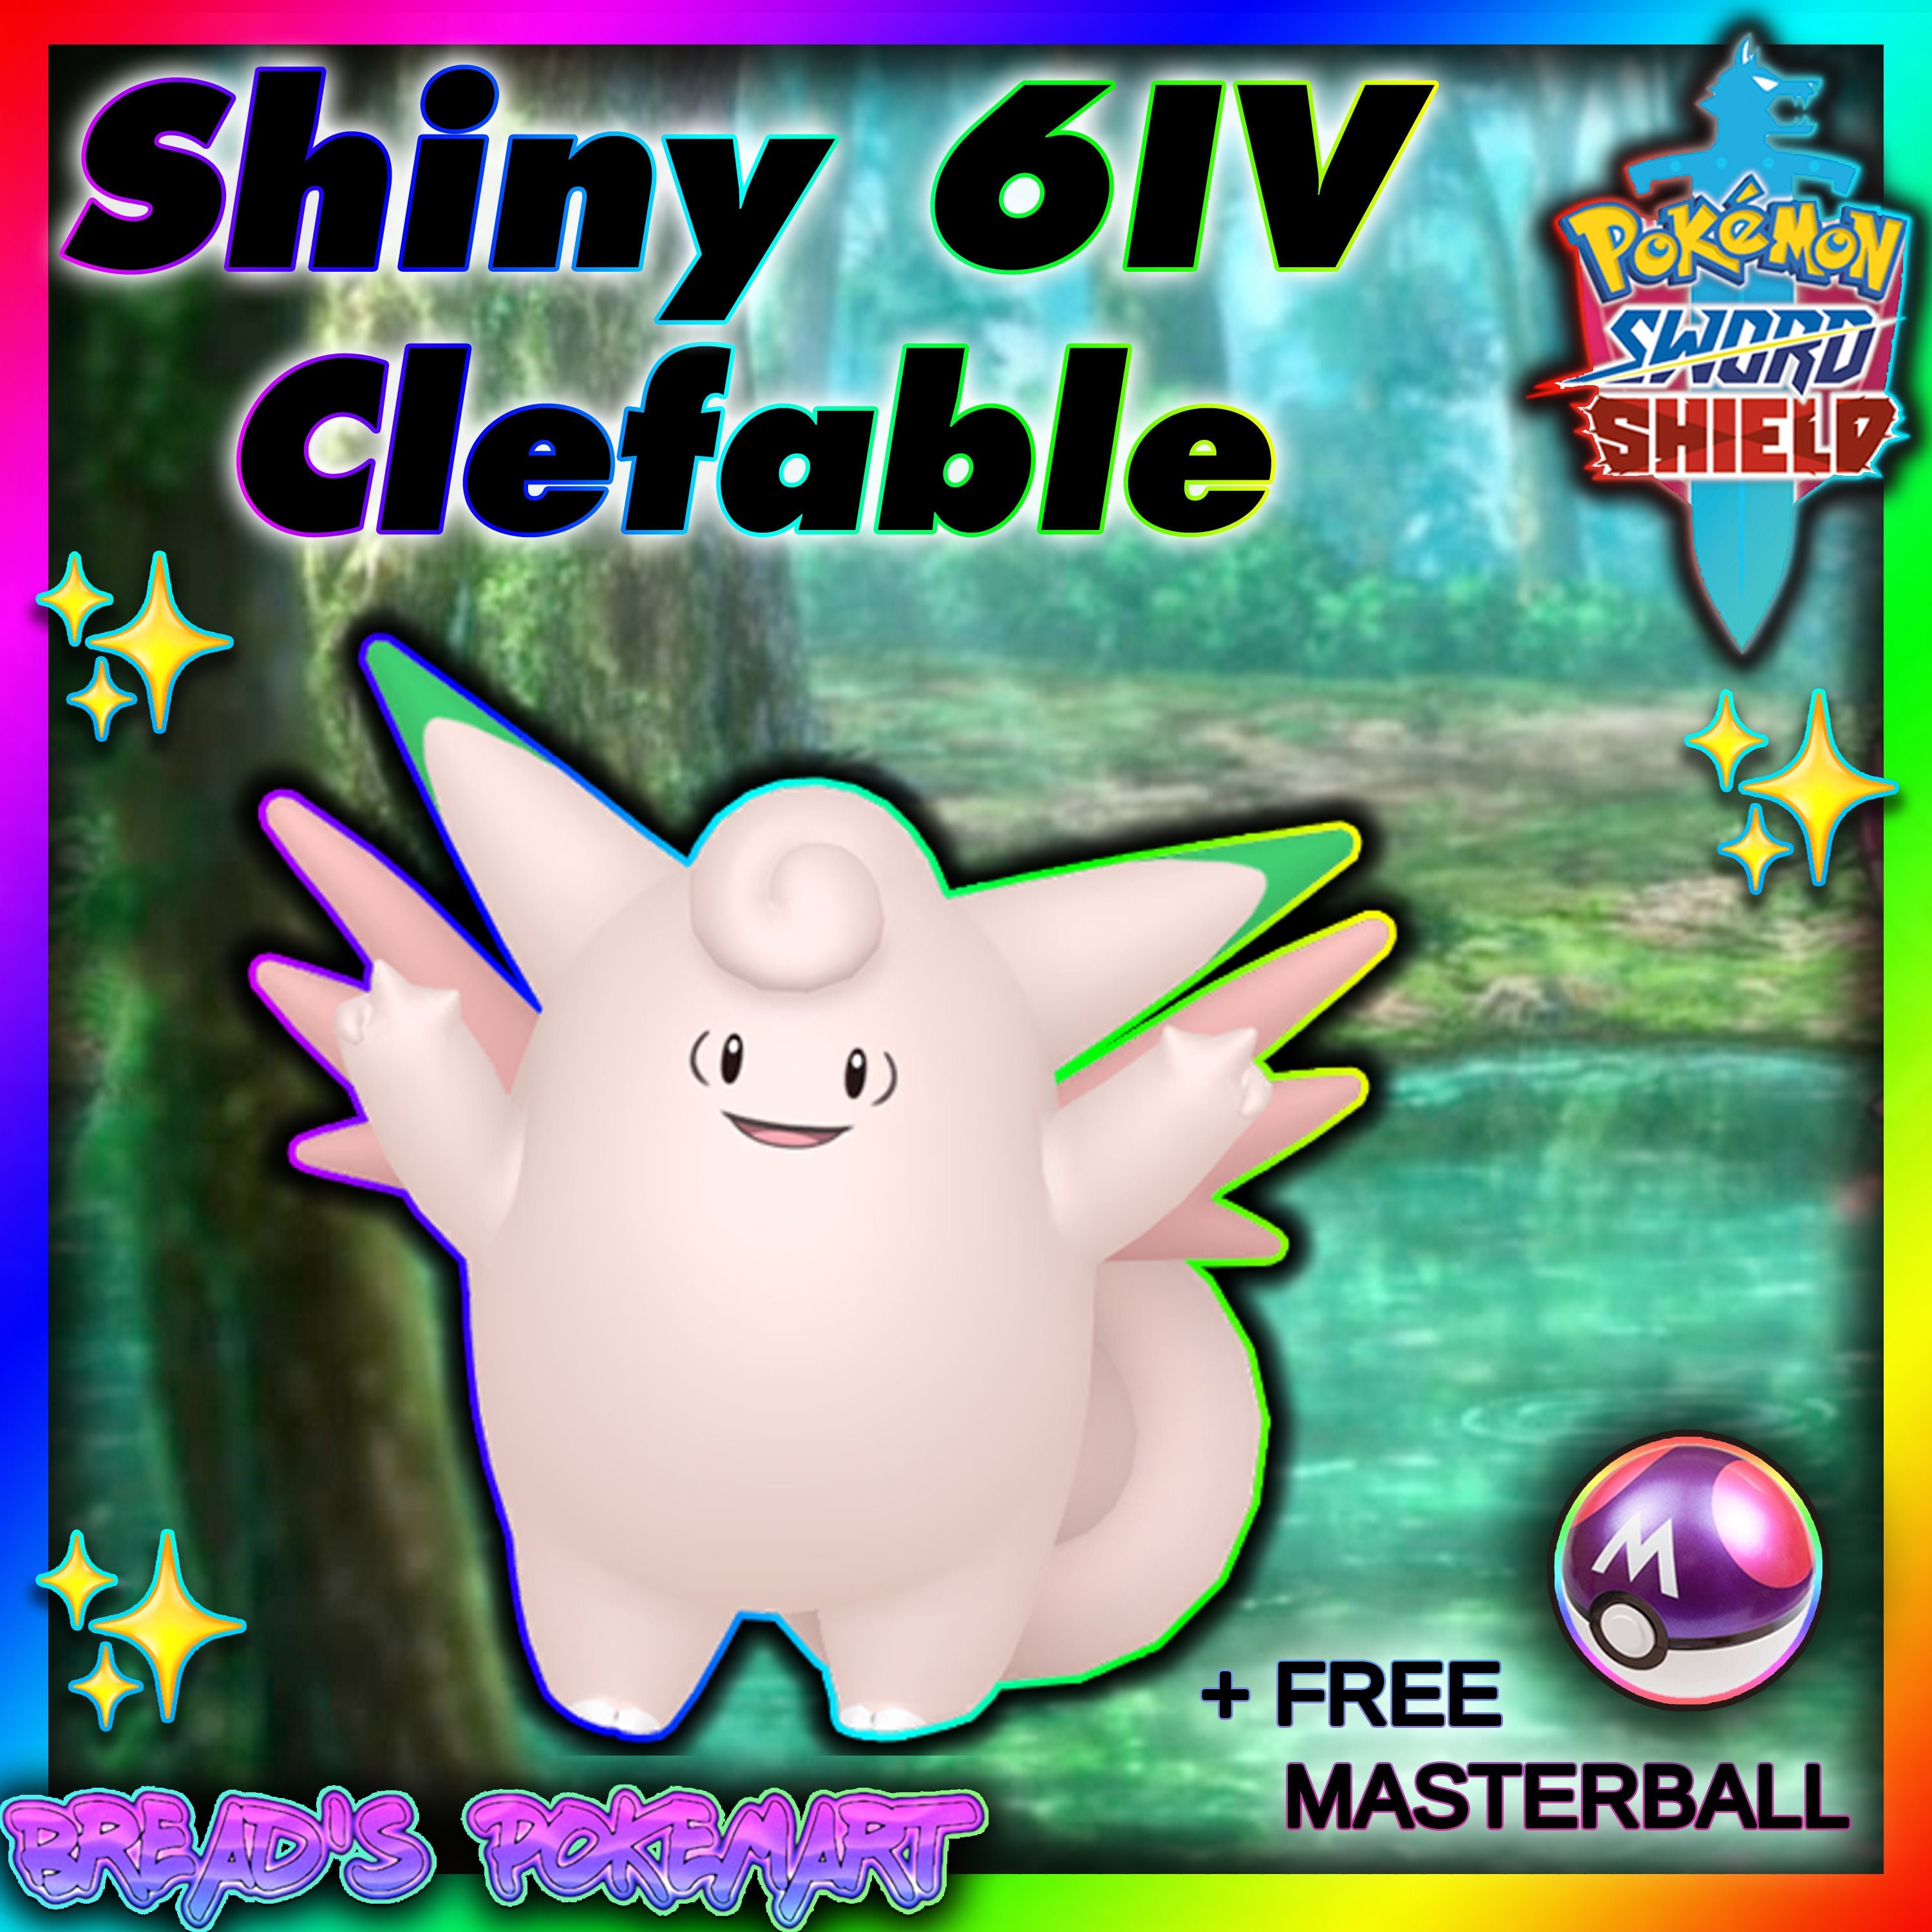 6IV Ultra Shiny Clefable Pokemon Sword and Shield Square Shiny 